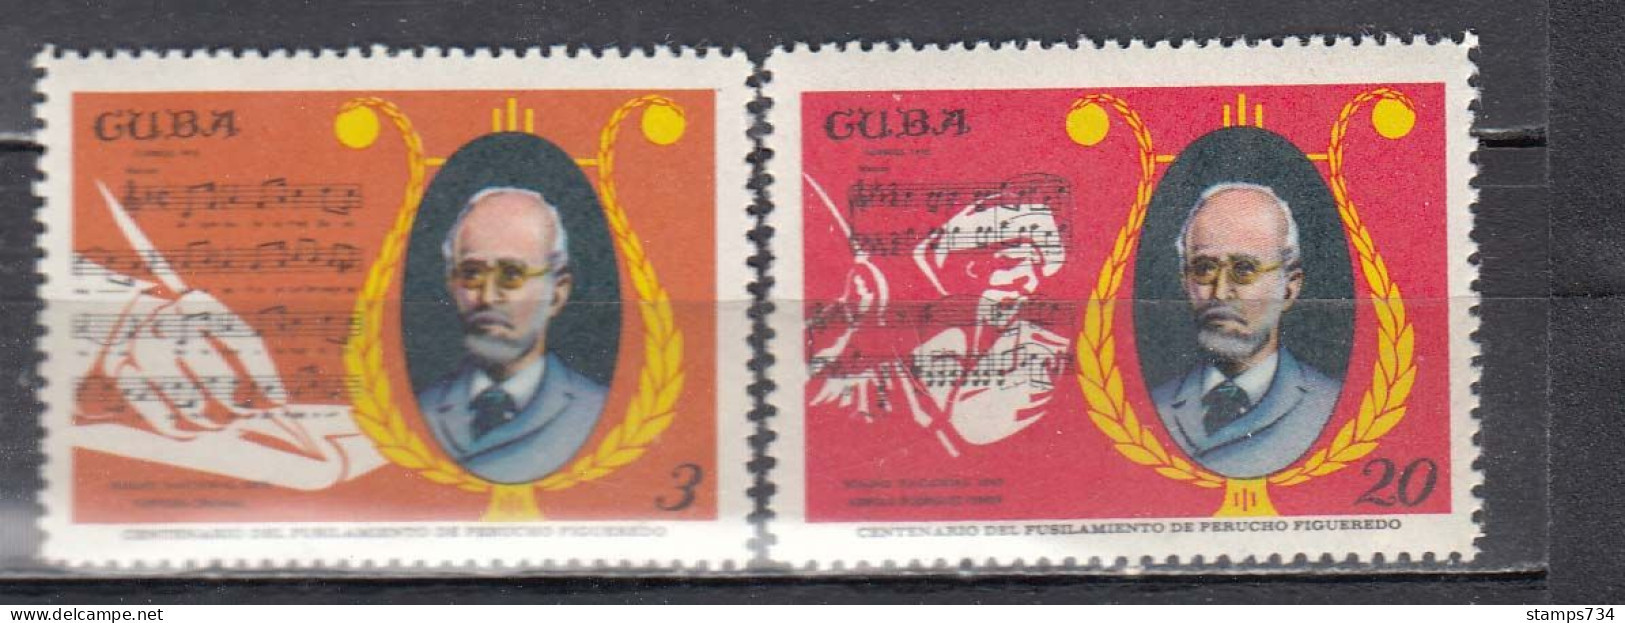 Cuba 1970 - 100th Anniversary Of The Death Of Perucho Figueredo, Mi-Nr. 1616/17, MNH** - Nuevos